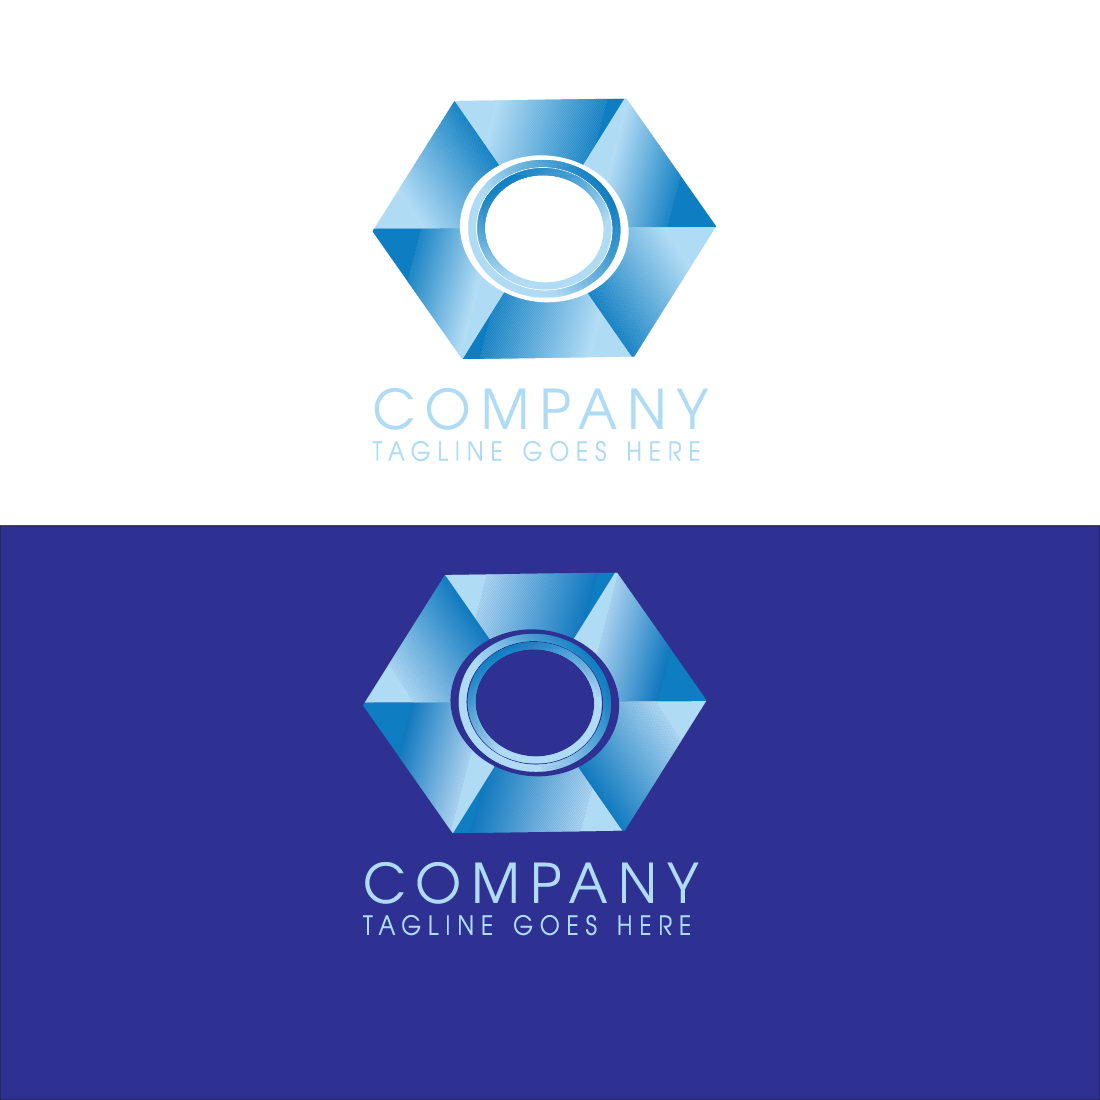 camera logo ideas